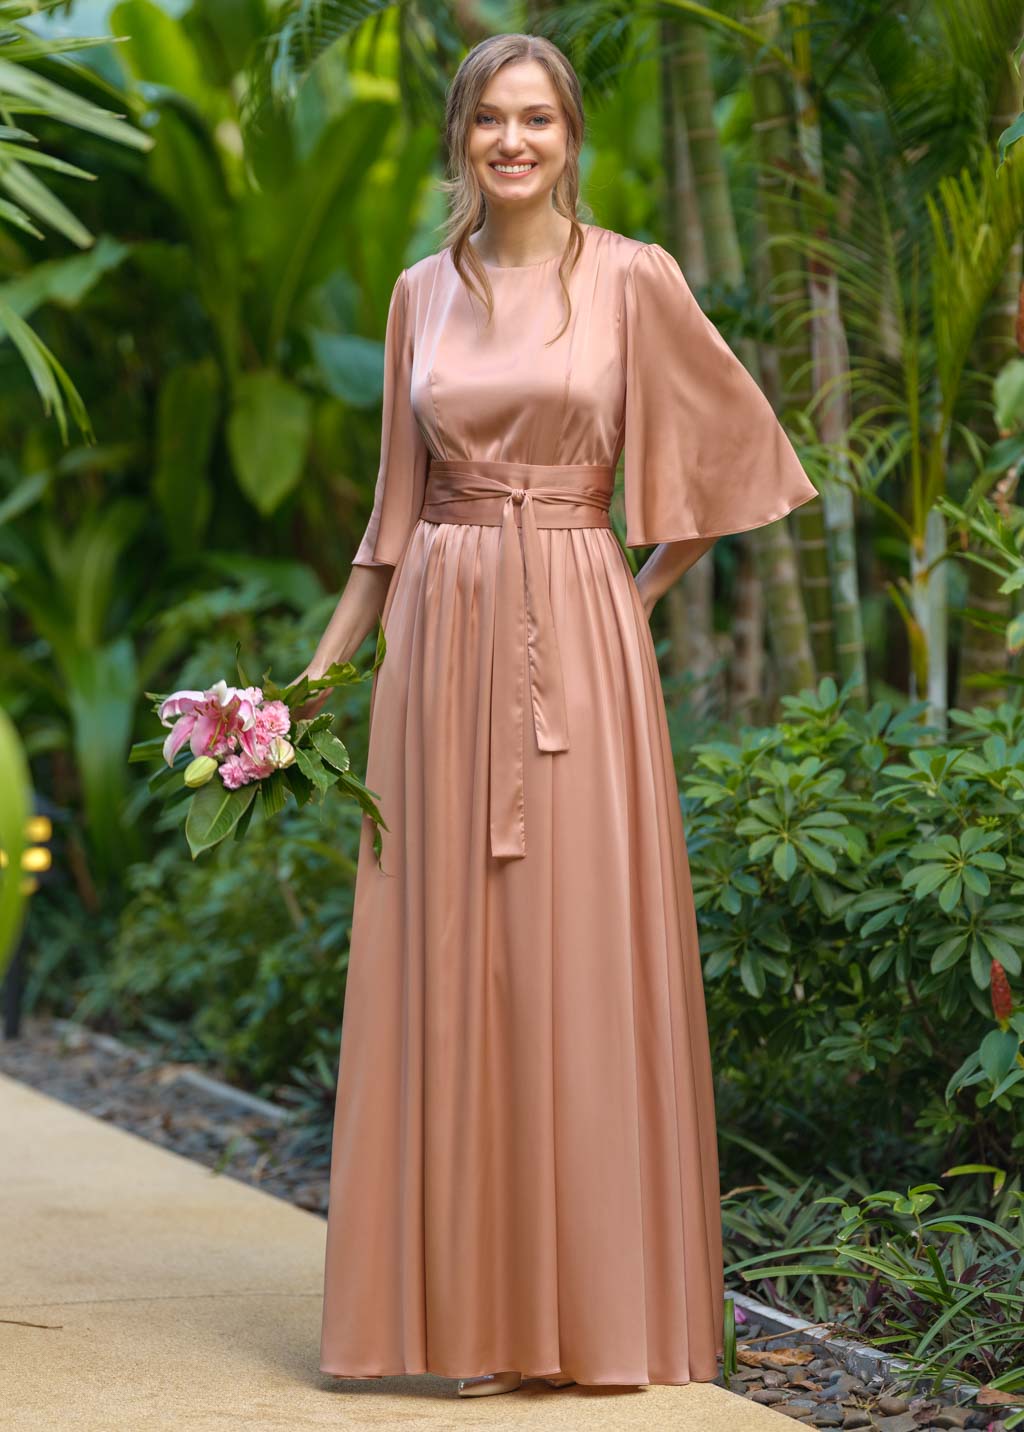 Rose gold silk dress with belt